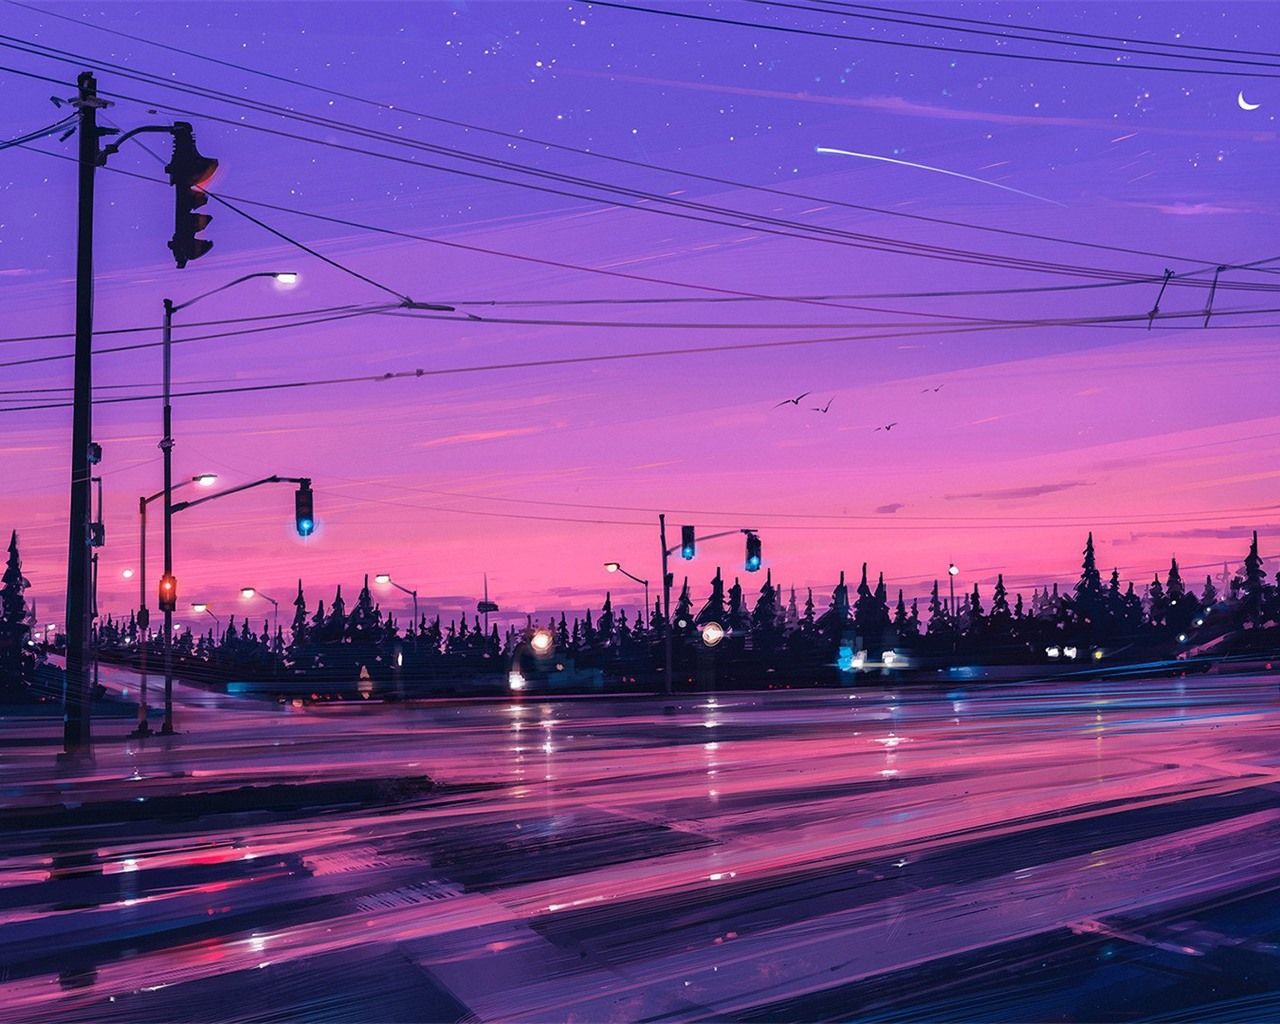 Wallpaper Night, city, traffic, lights, road, purple sky, art drawing 1920x1080 Full HD 2K Picture, Image